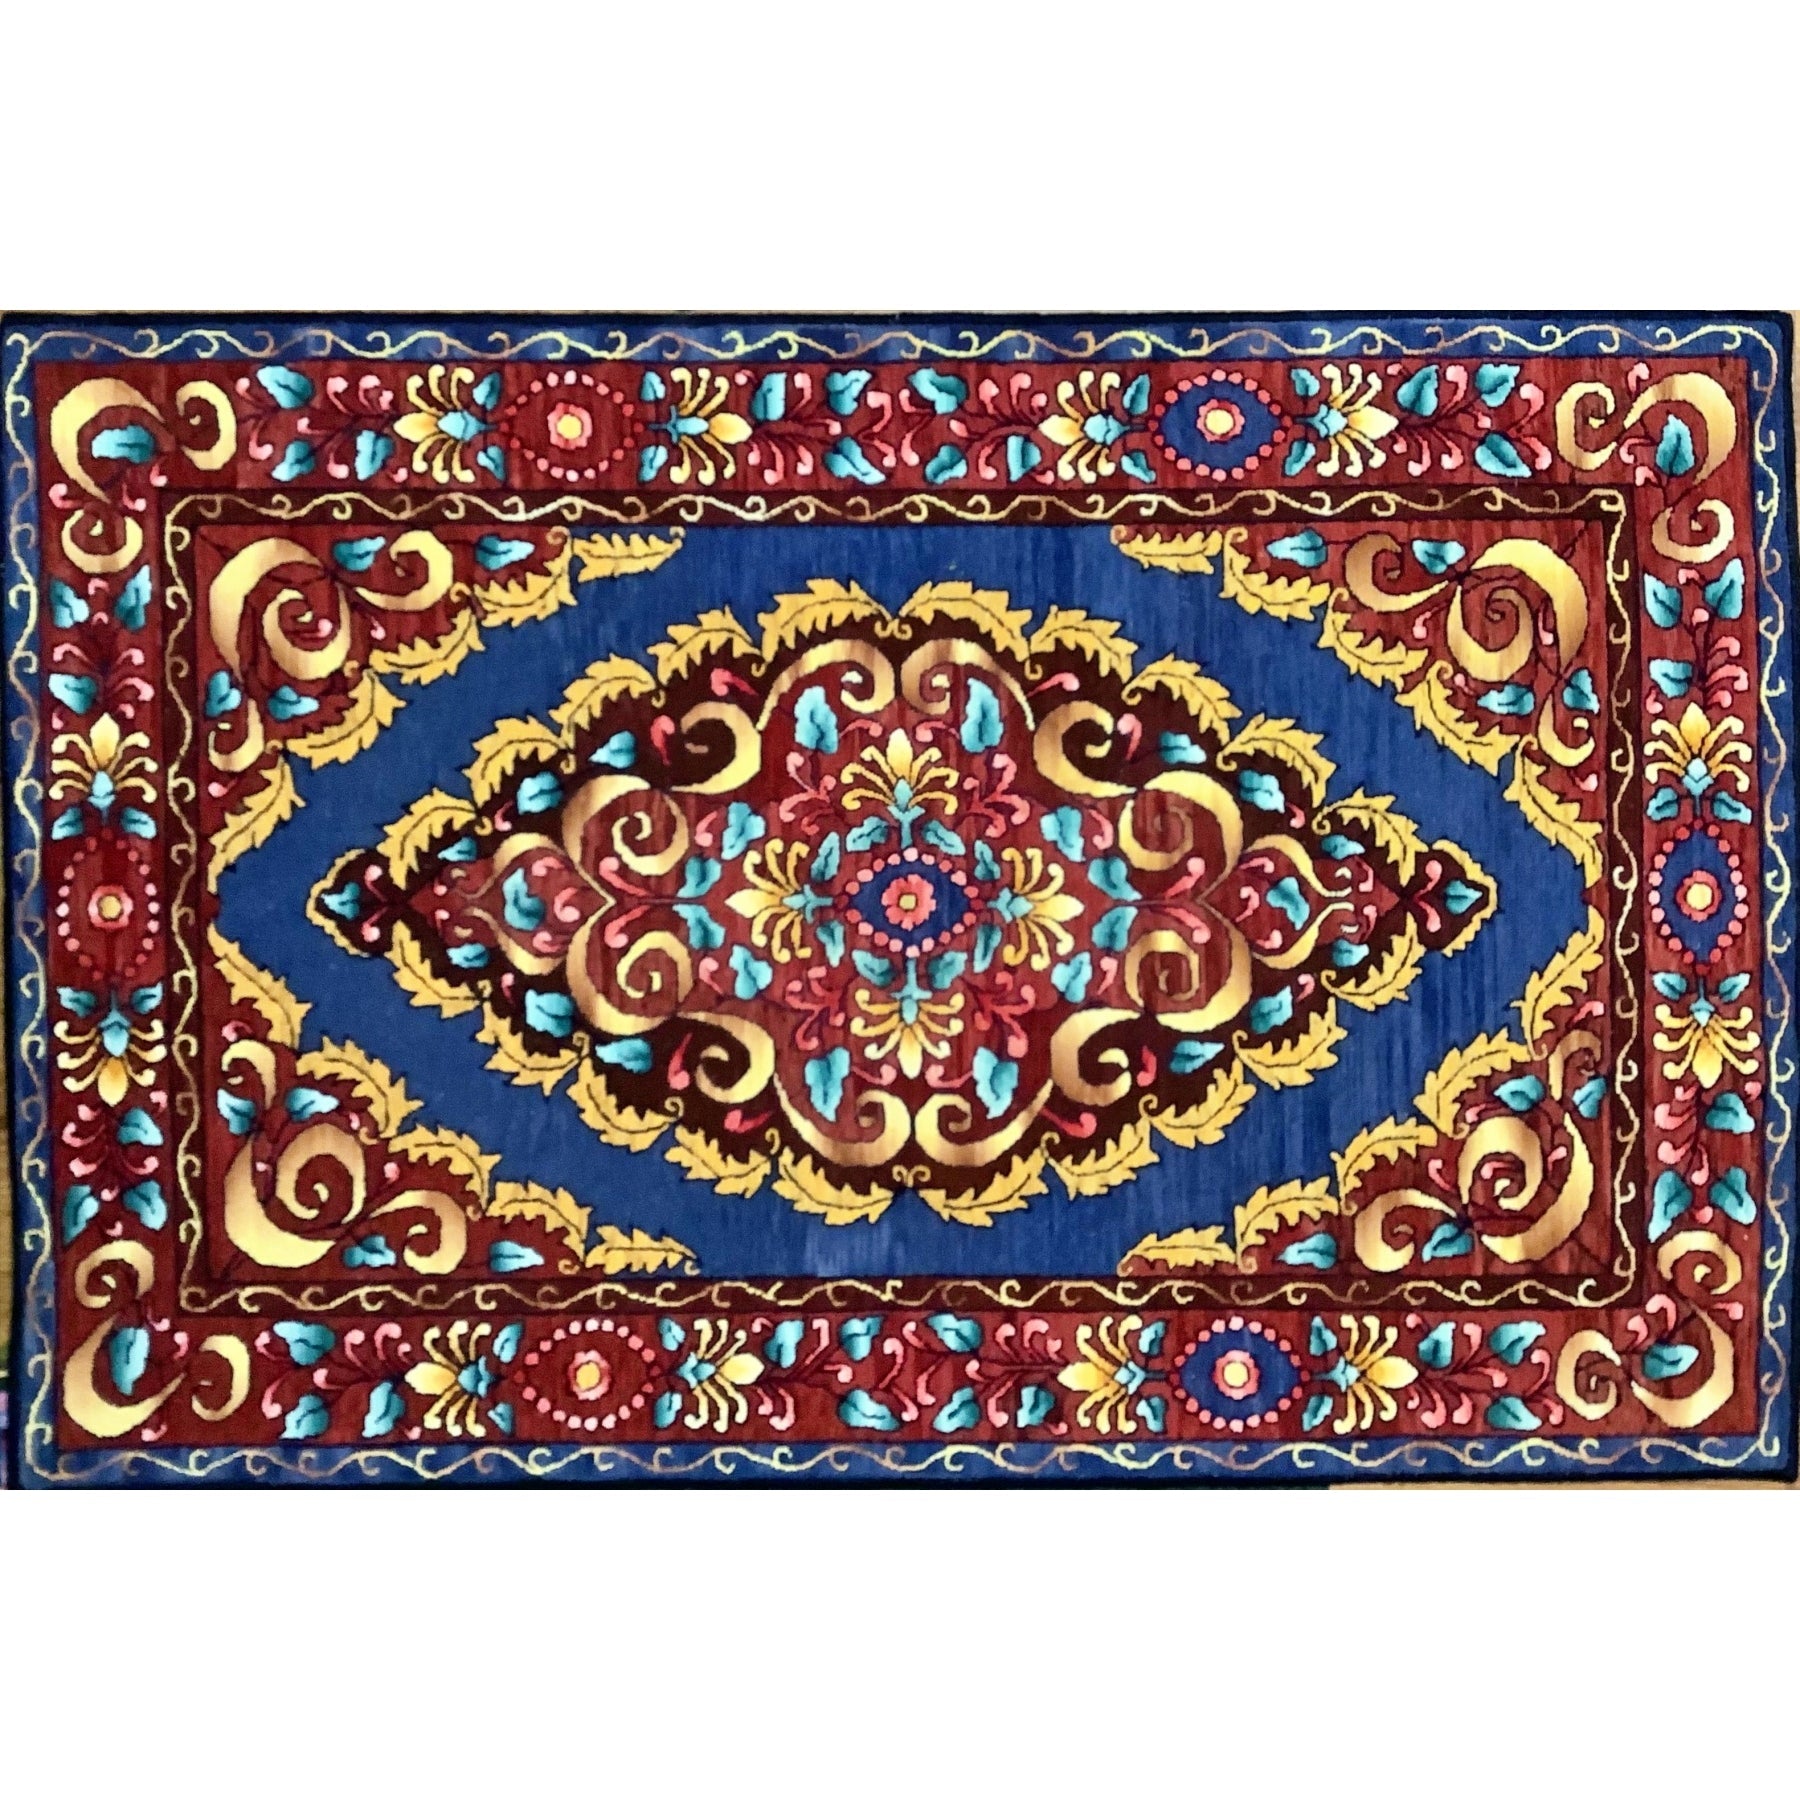 Kashi, rug hooked by Karen Kaiser